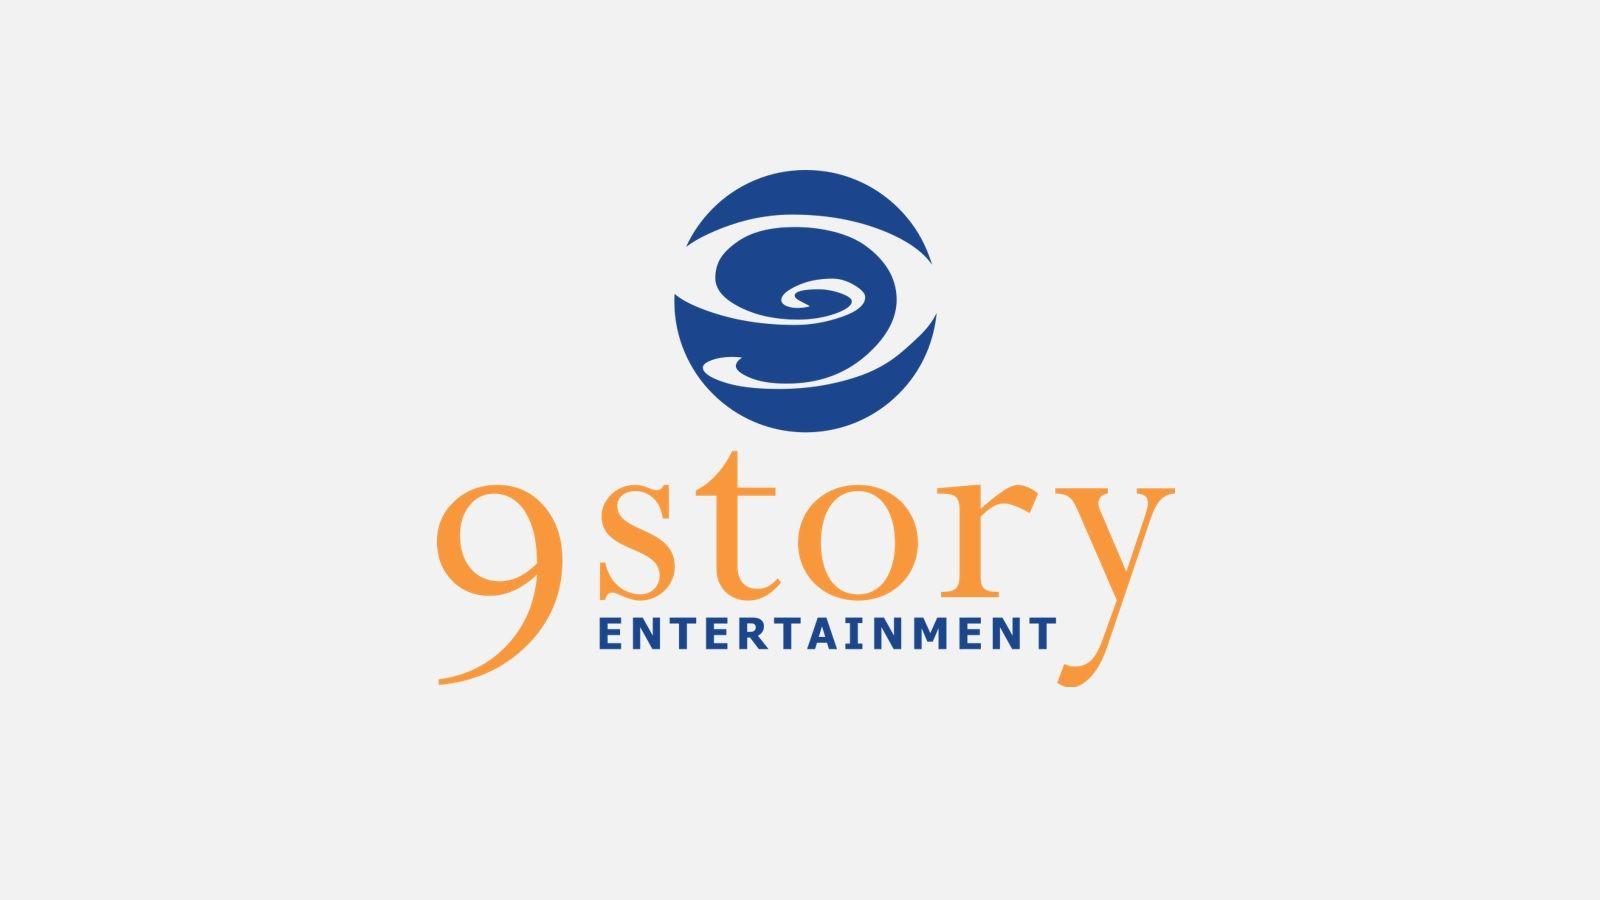 9 Story Entertainment Logo - Image - 9 Story Entertainment Logo (2006).jpg | Logopedia | FANDOM ...